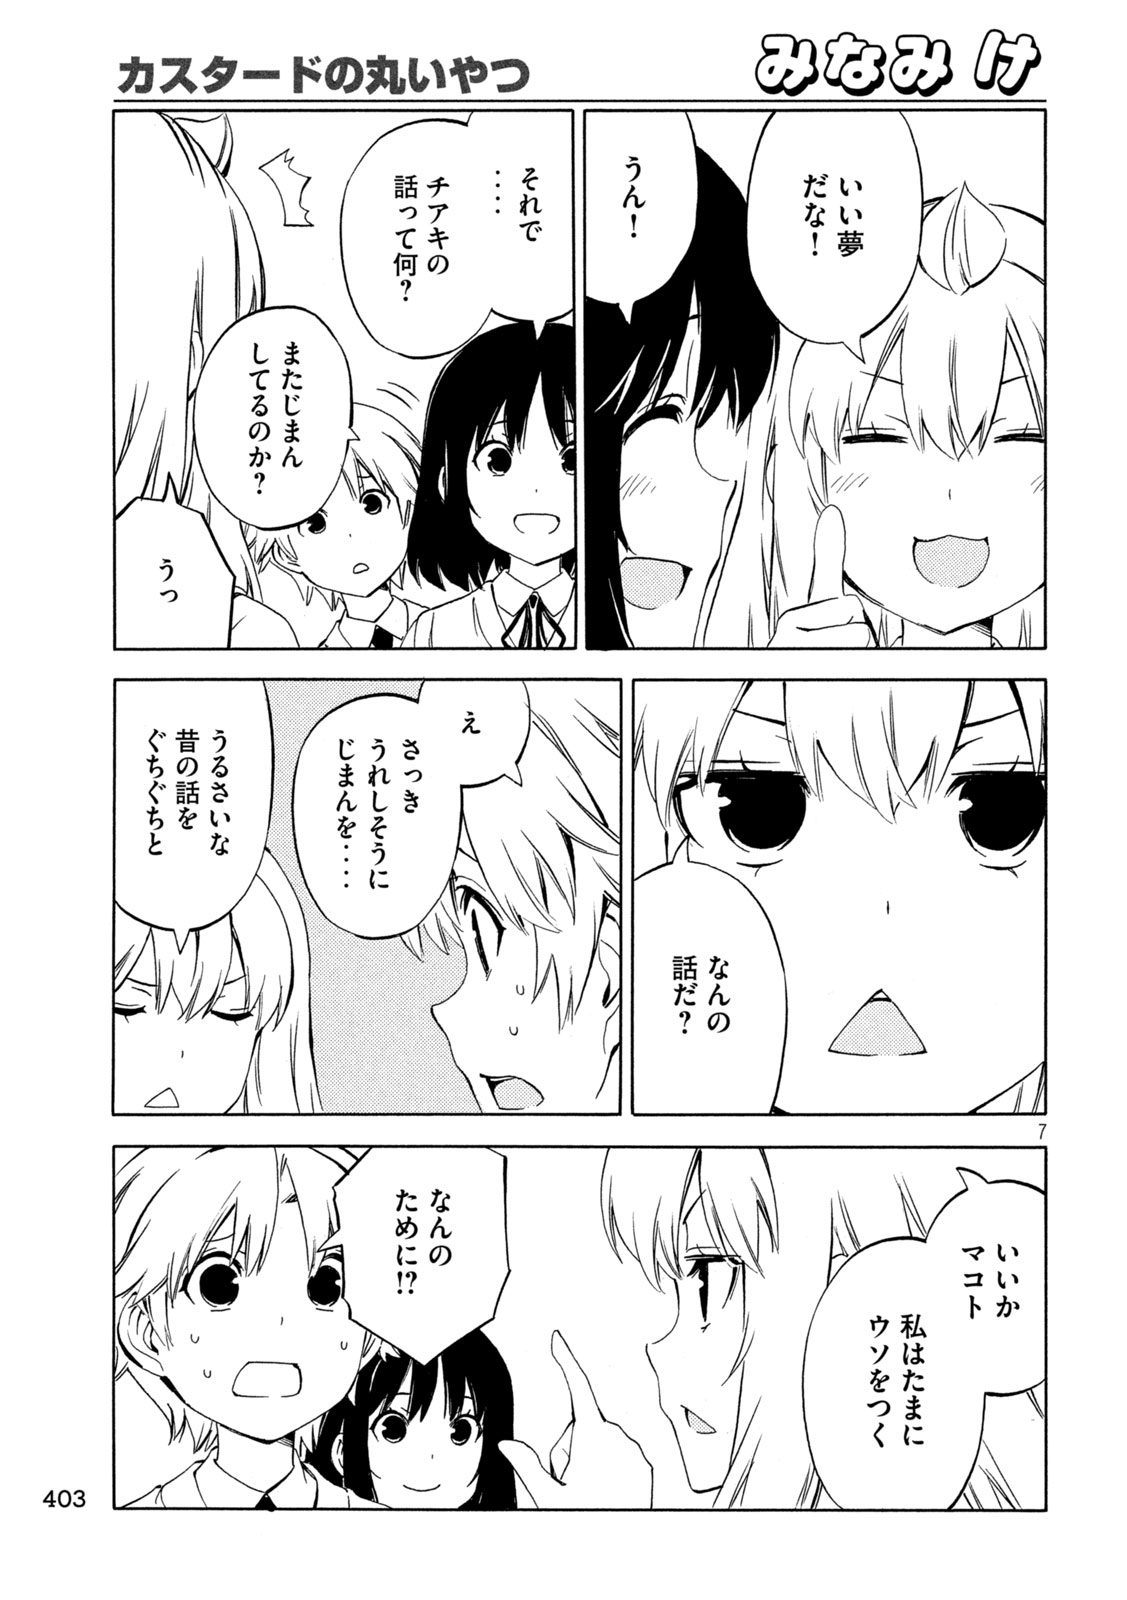 Minami-ke - Chapter 486 - Page 7